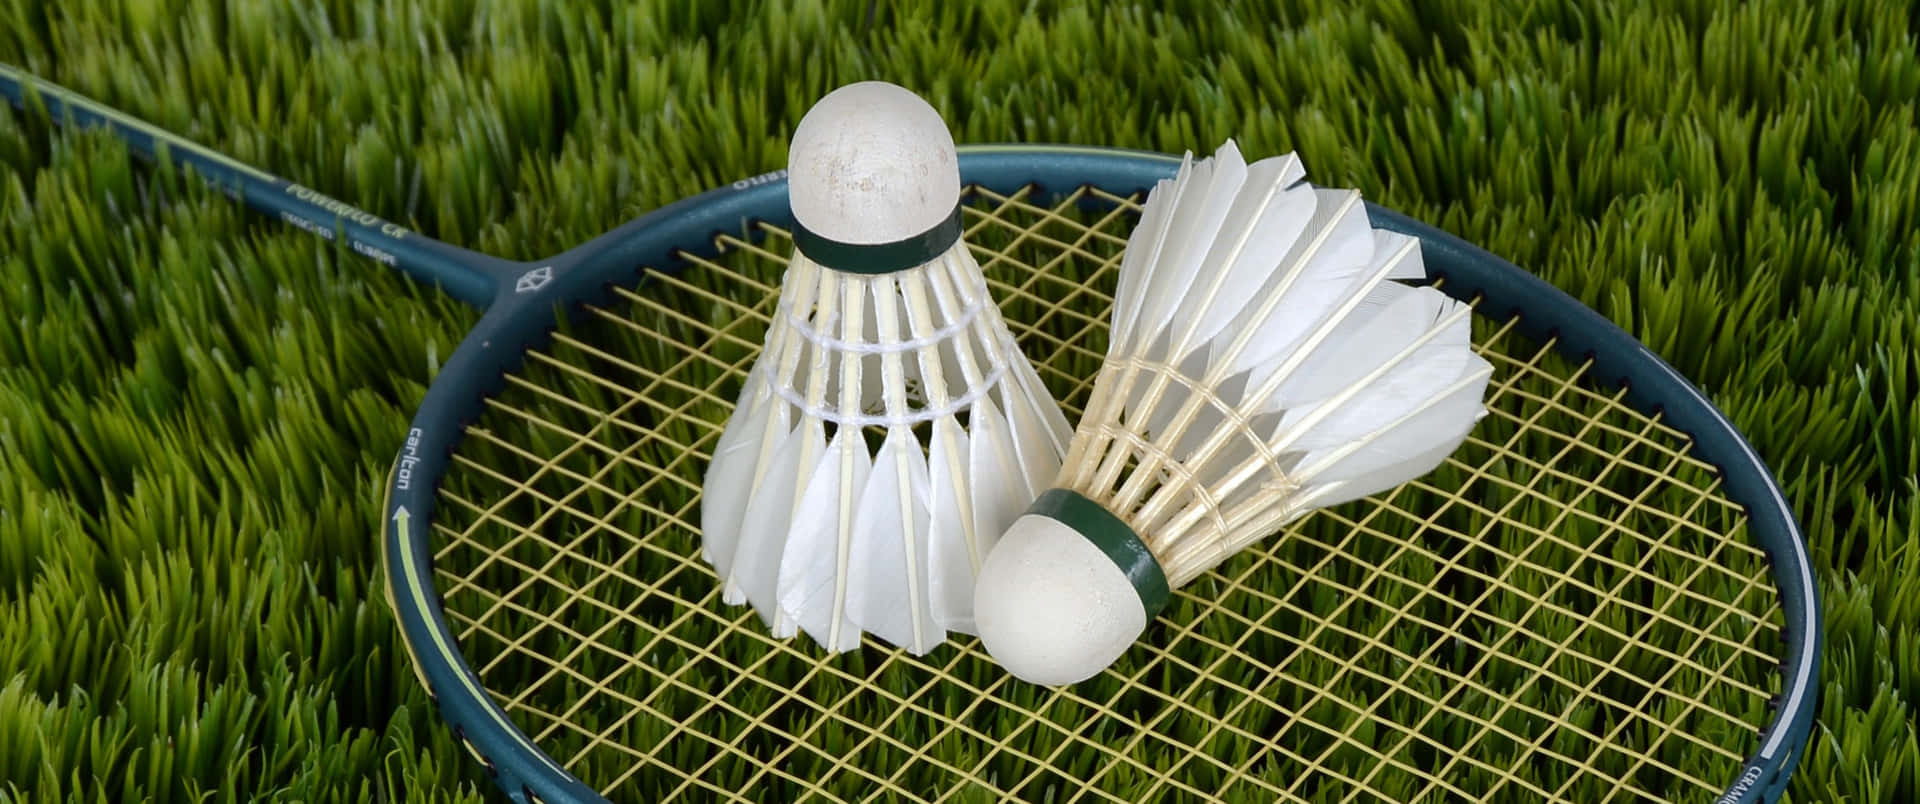 Badminton Shuttlecock And Racket On Grass